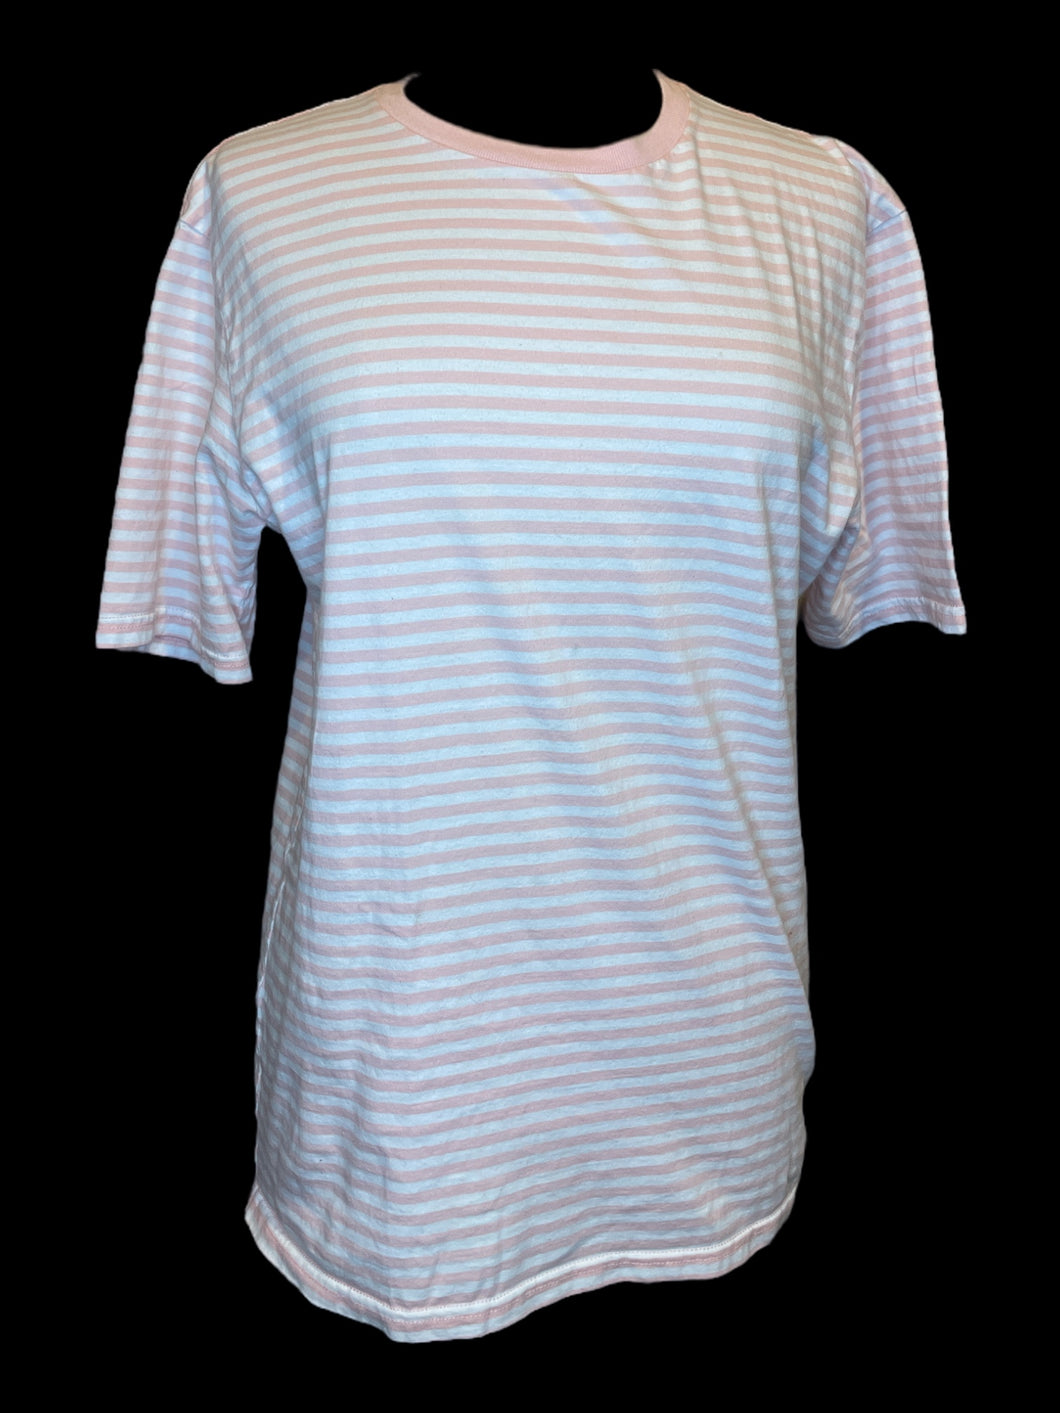 L Light pink & white stripe short sleeve crew neck cotton top